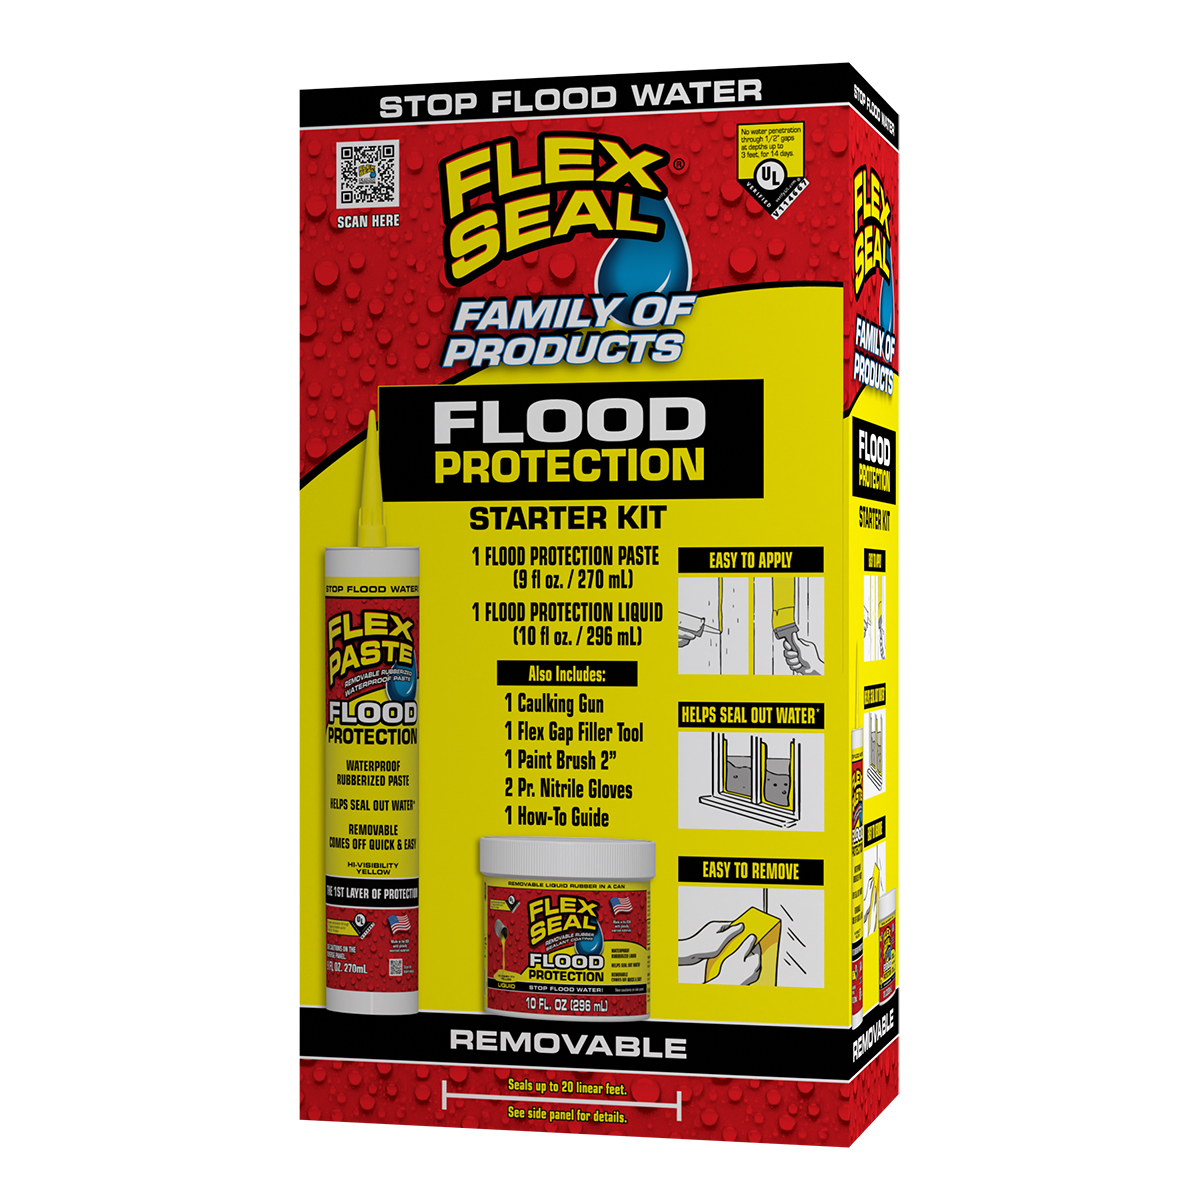 Flex Seal Flood Protection Starter Kit RKITSTART02 - Yellow Flood Protection Barrier Kit Flood Protection Paste and Liquid Plus 